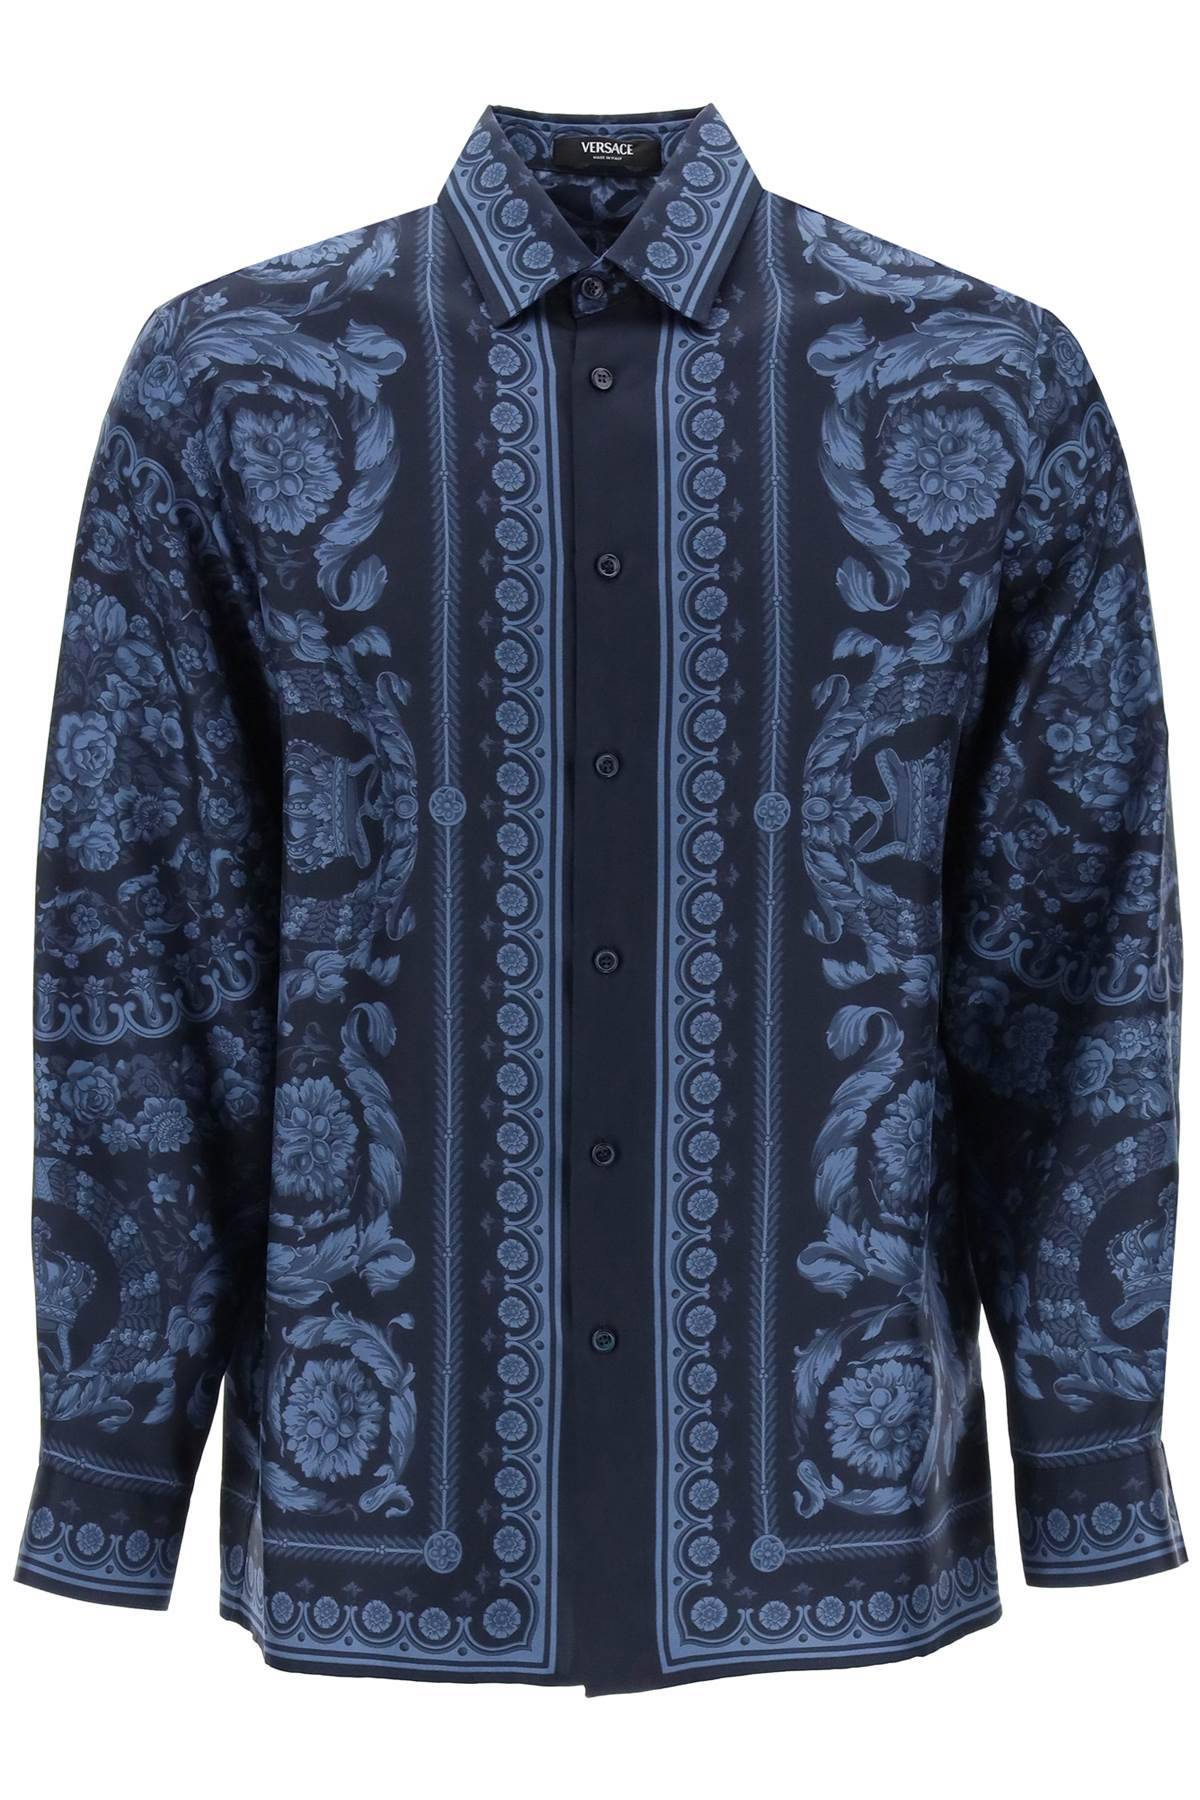 Versace VERSACE barocco silk shirt